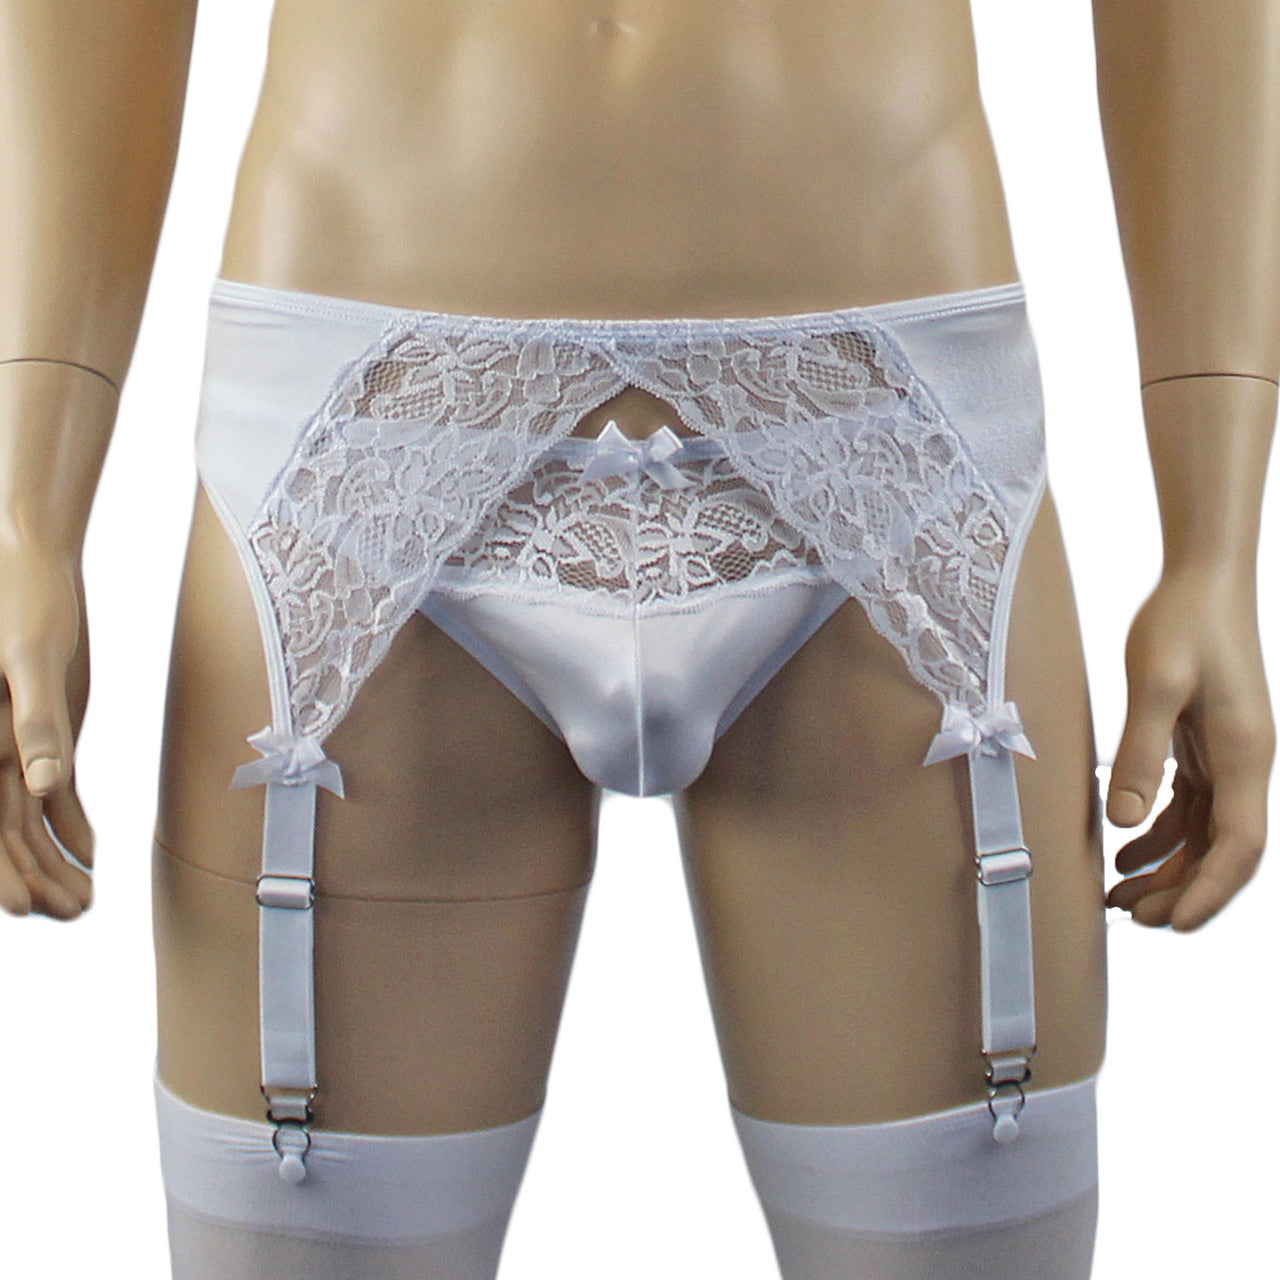 Male Romance Stretch Spandex G string Thong & Garterbelt White or Black